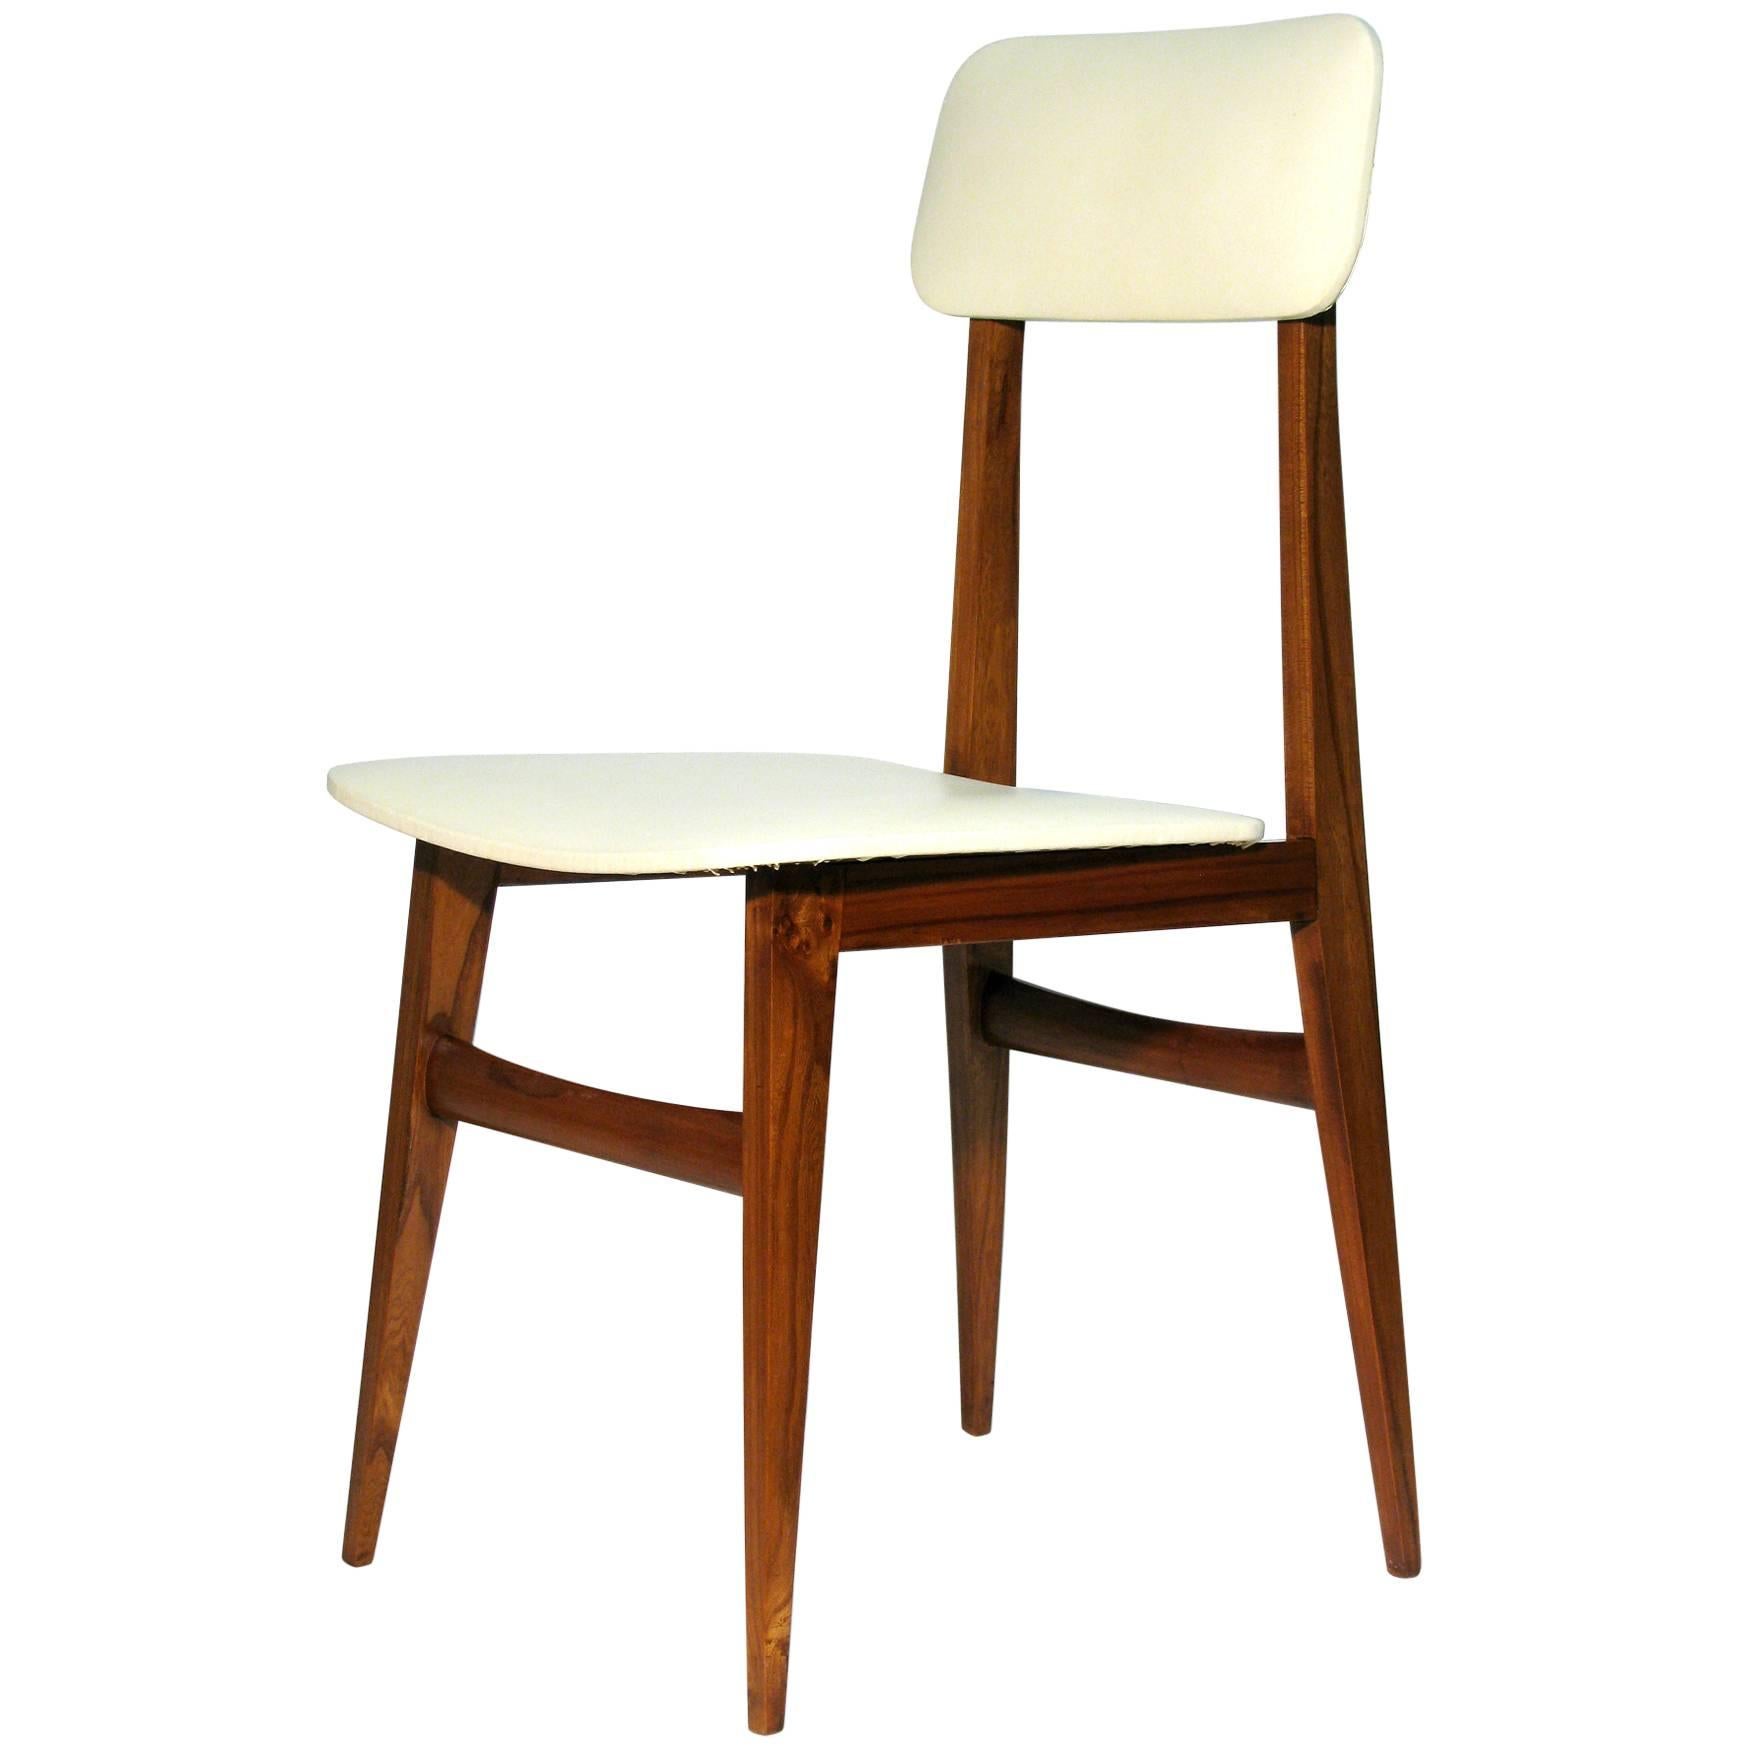 Italian Modernist Chair For Sale